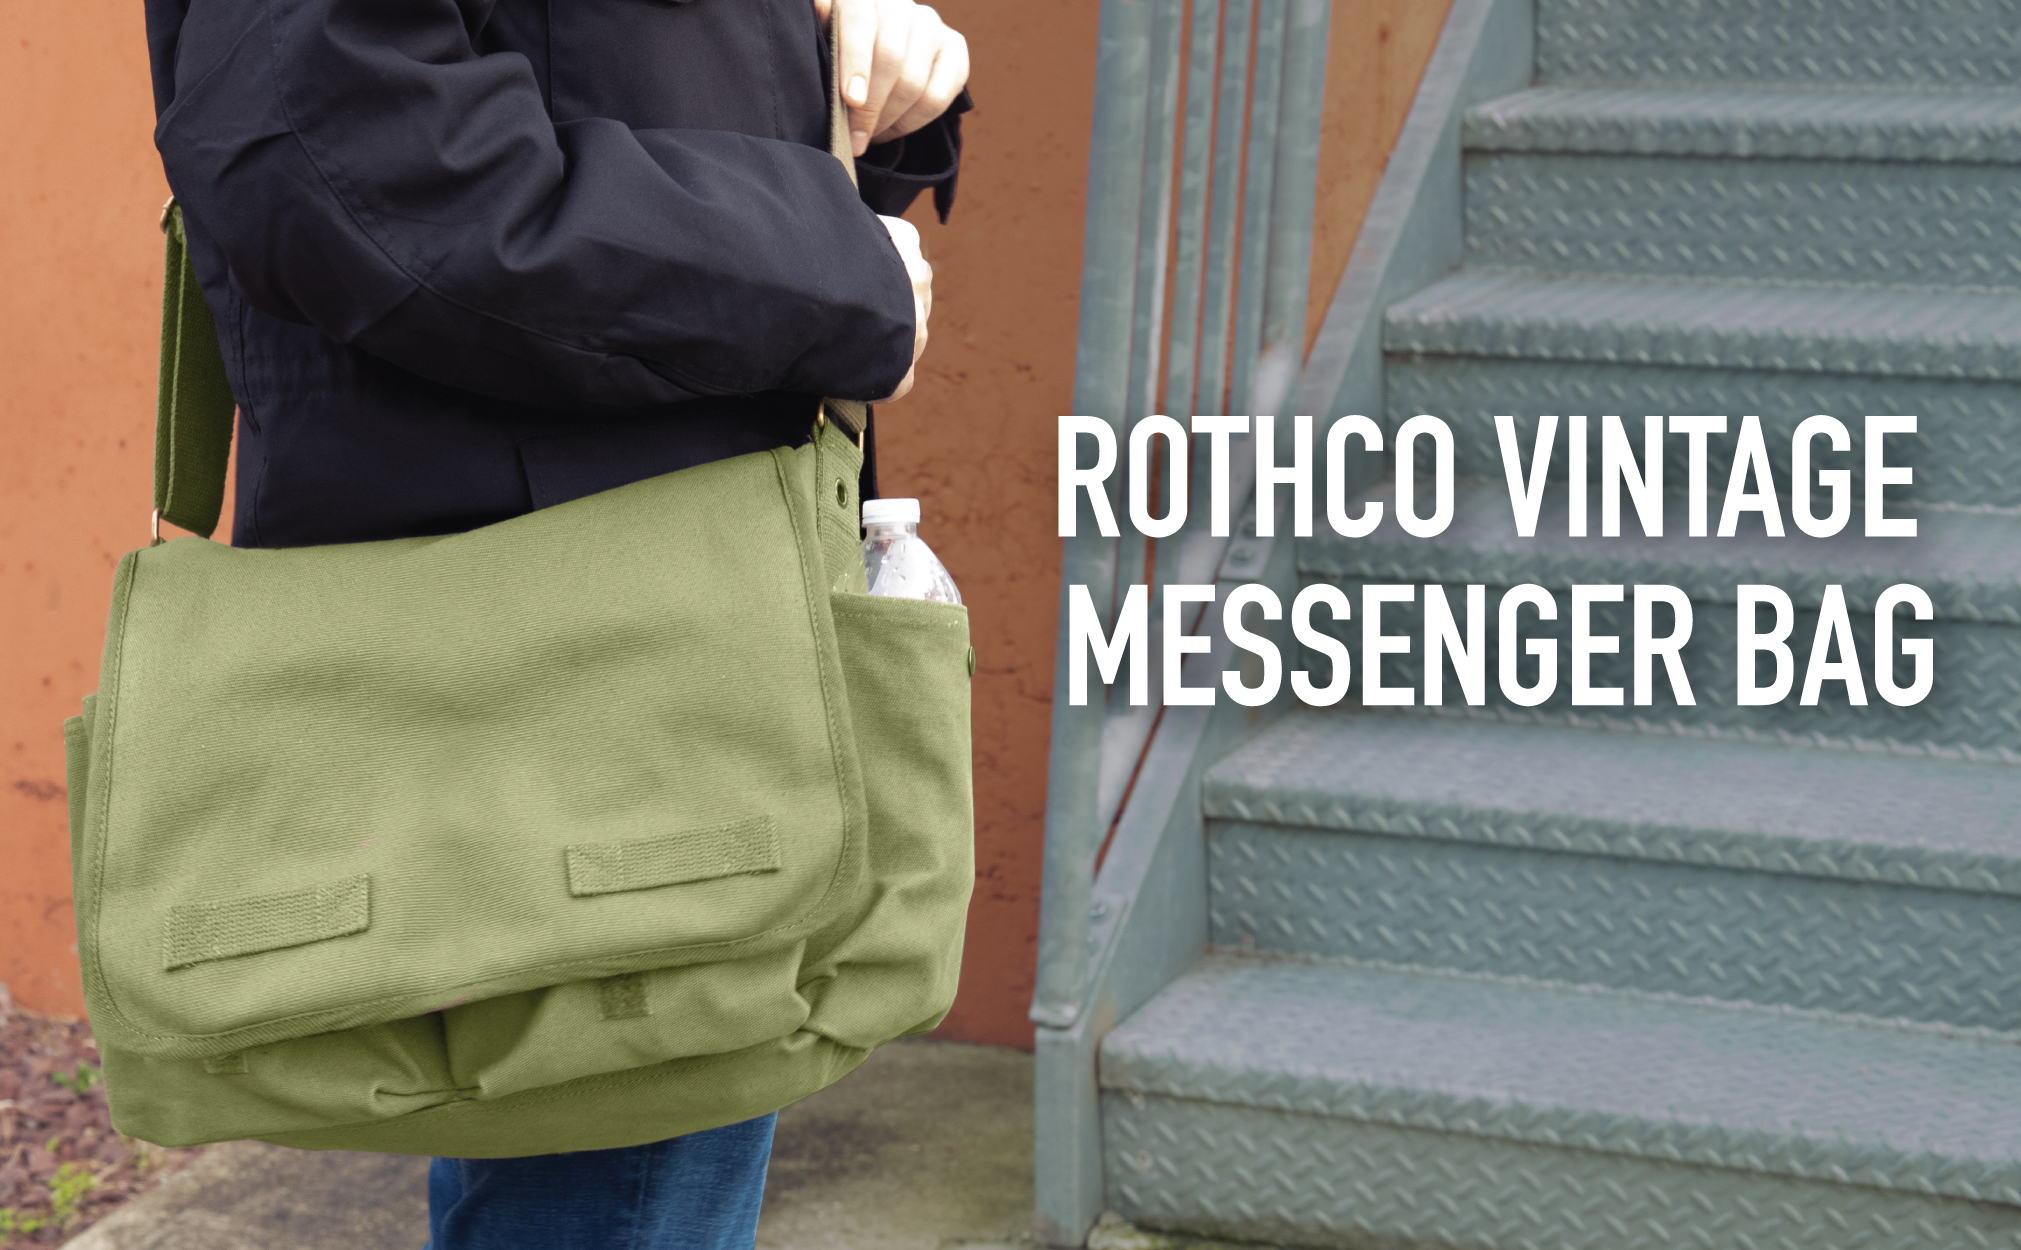 Rothco Classic Canvas Messenger Bag, Woodland Camo - image 3 of 3